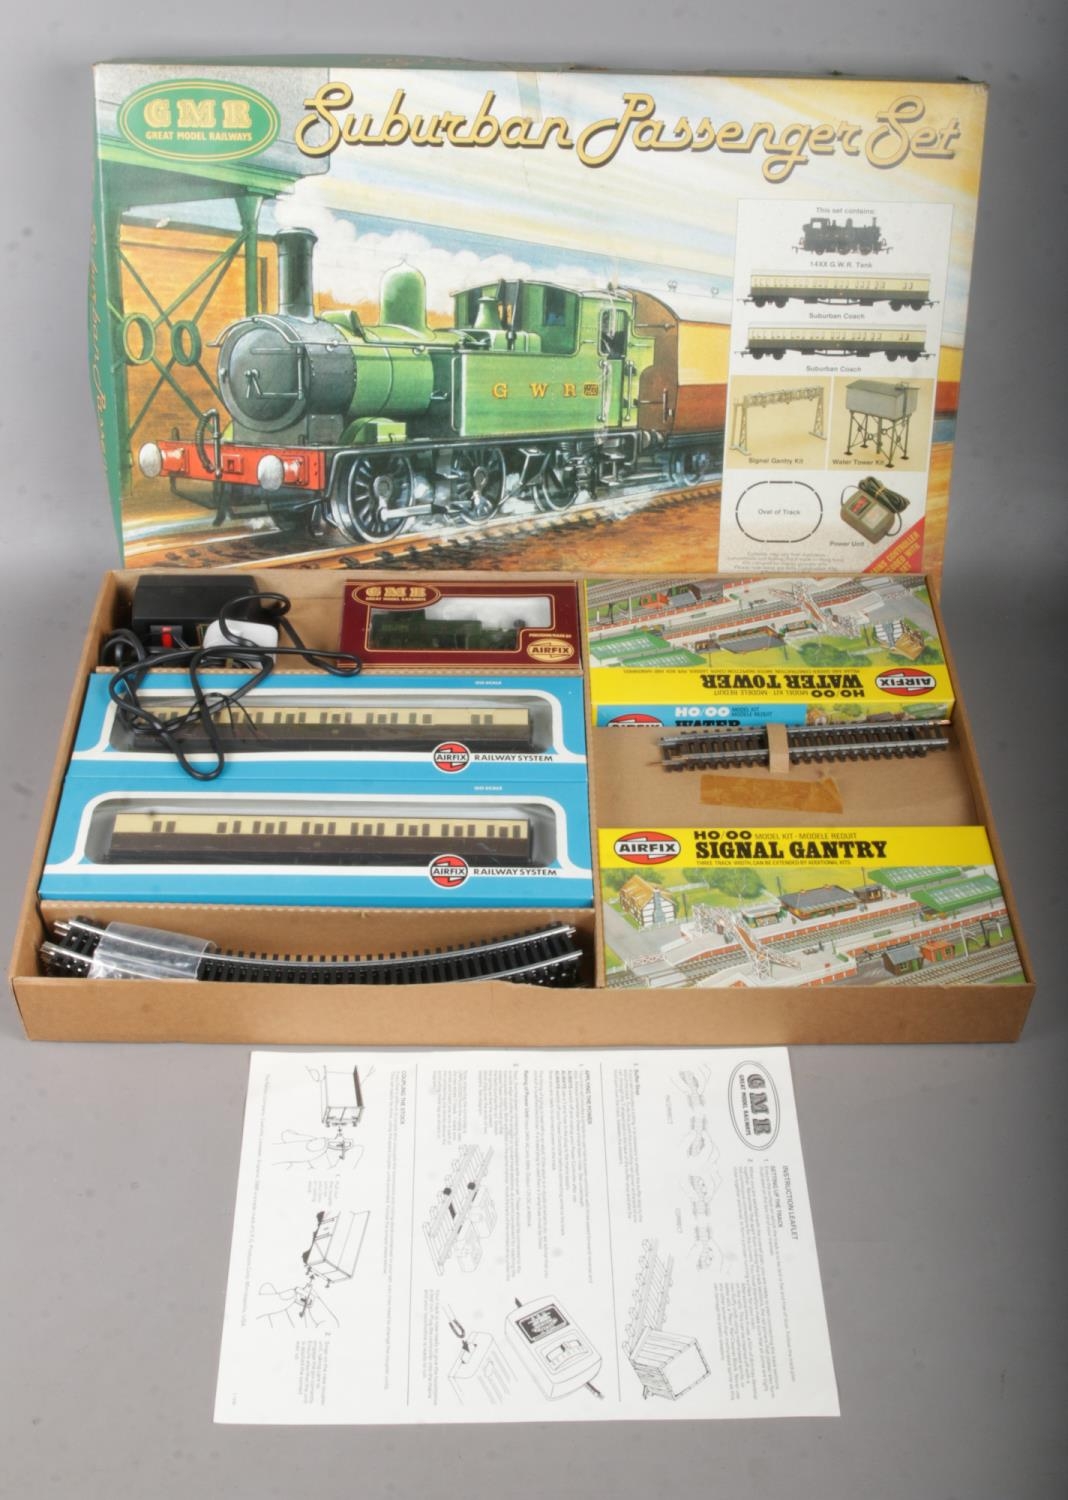 A boxed GMR Suburban Passenger train set in original box.